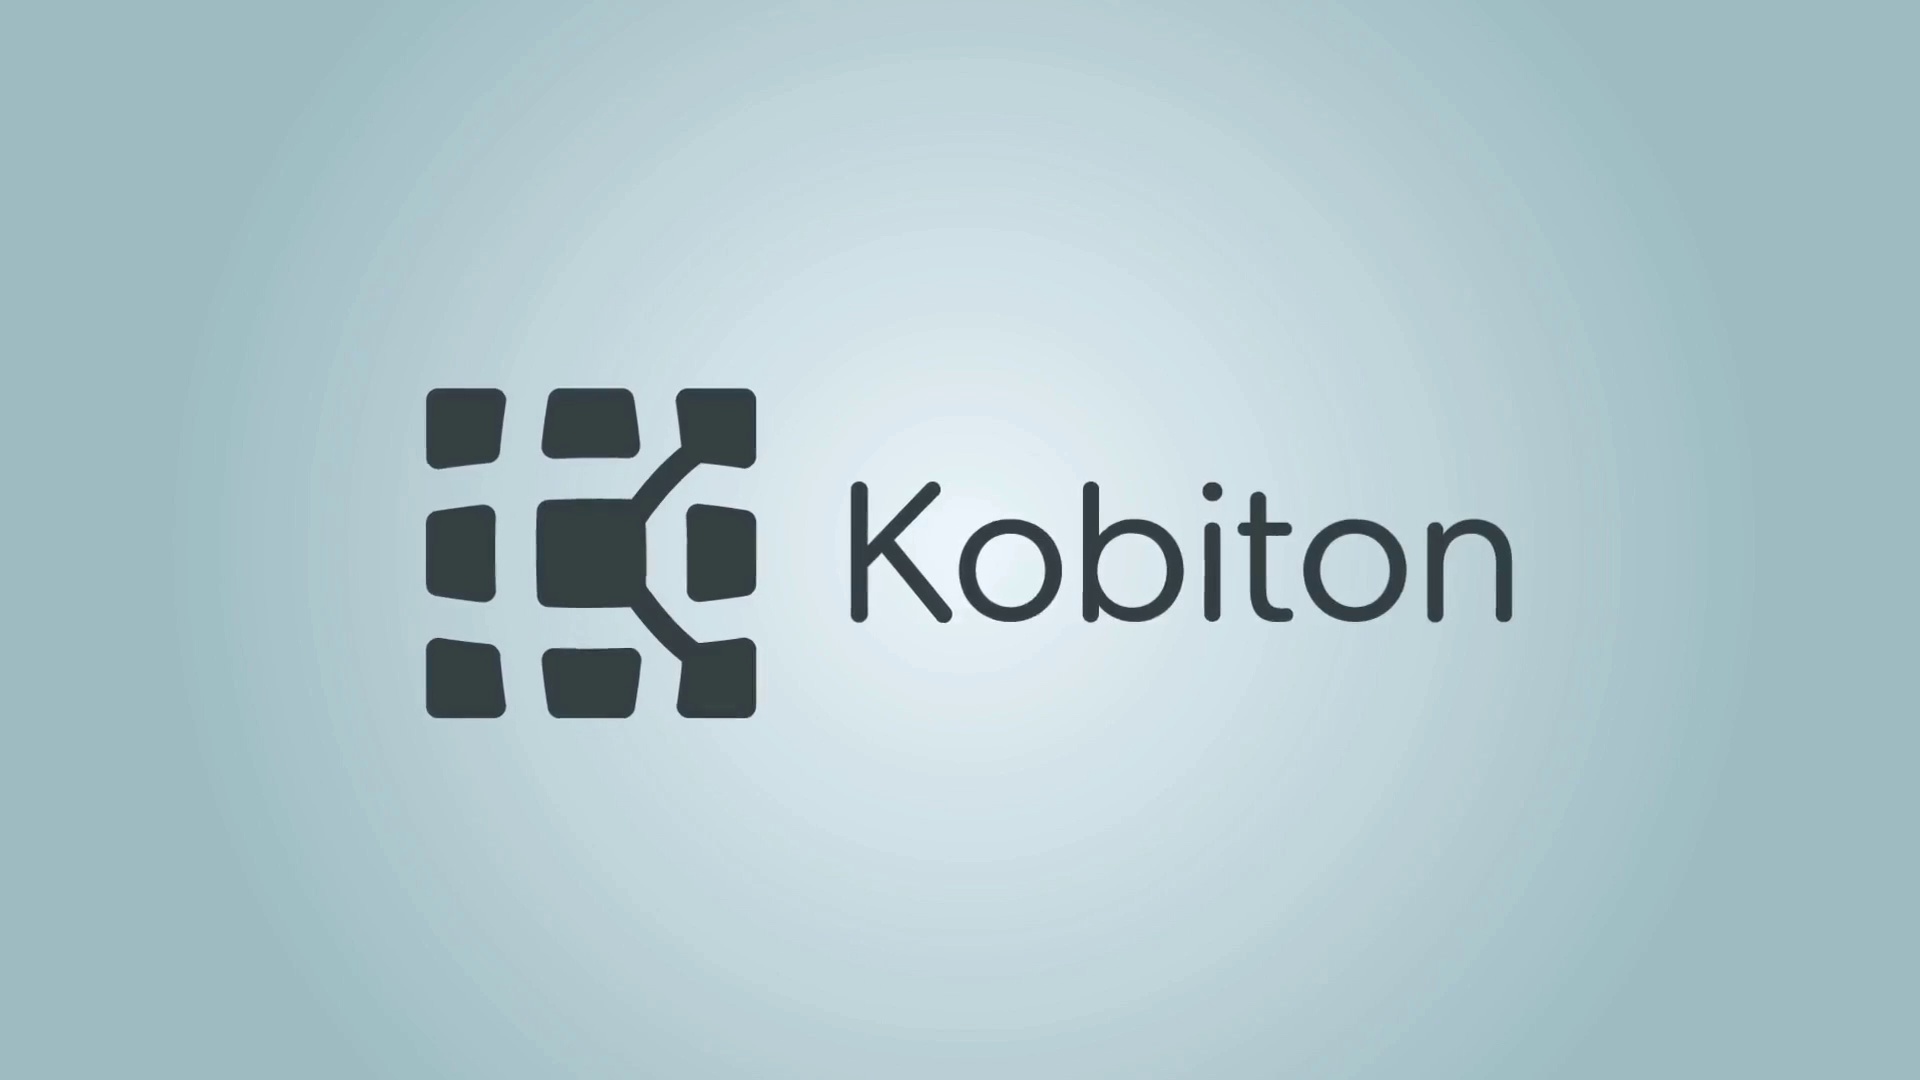 Introducing Kobiton - UI Automation Week 2021